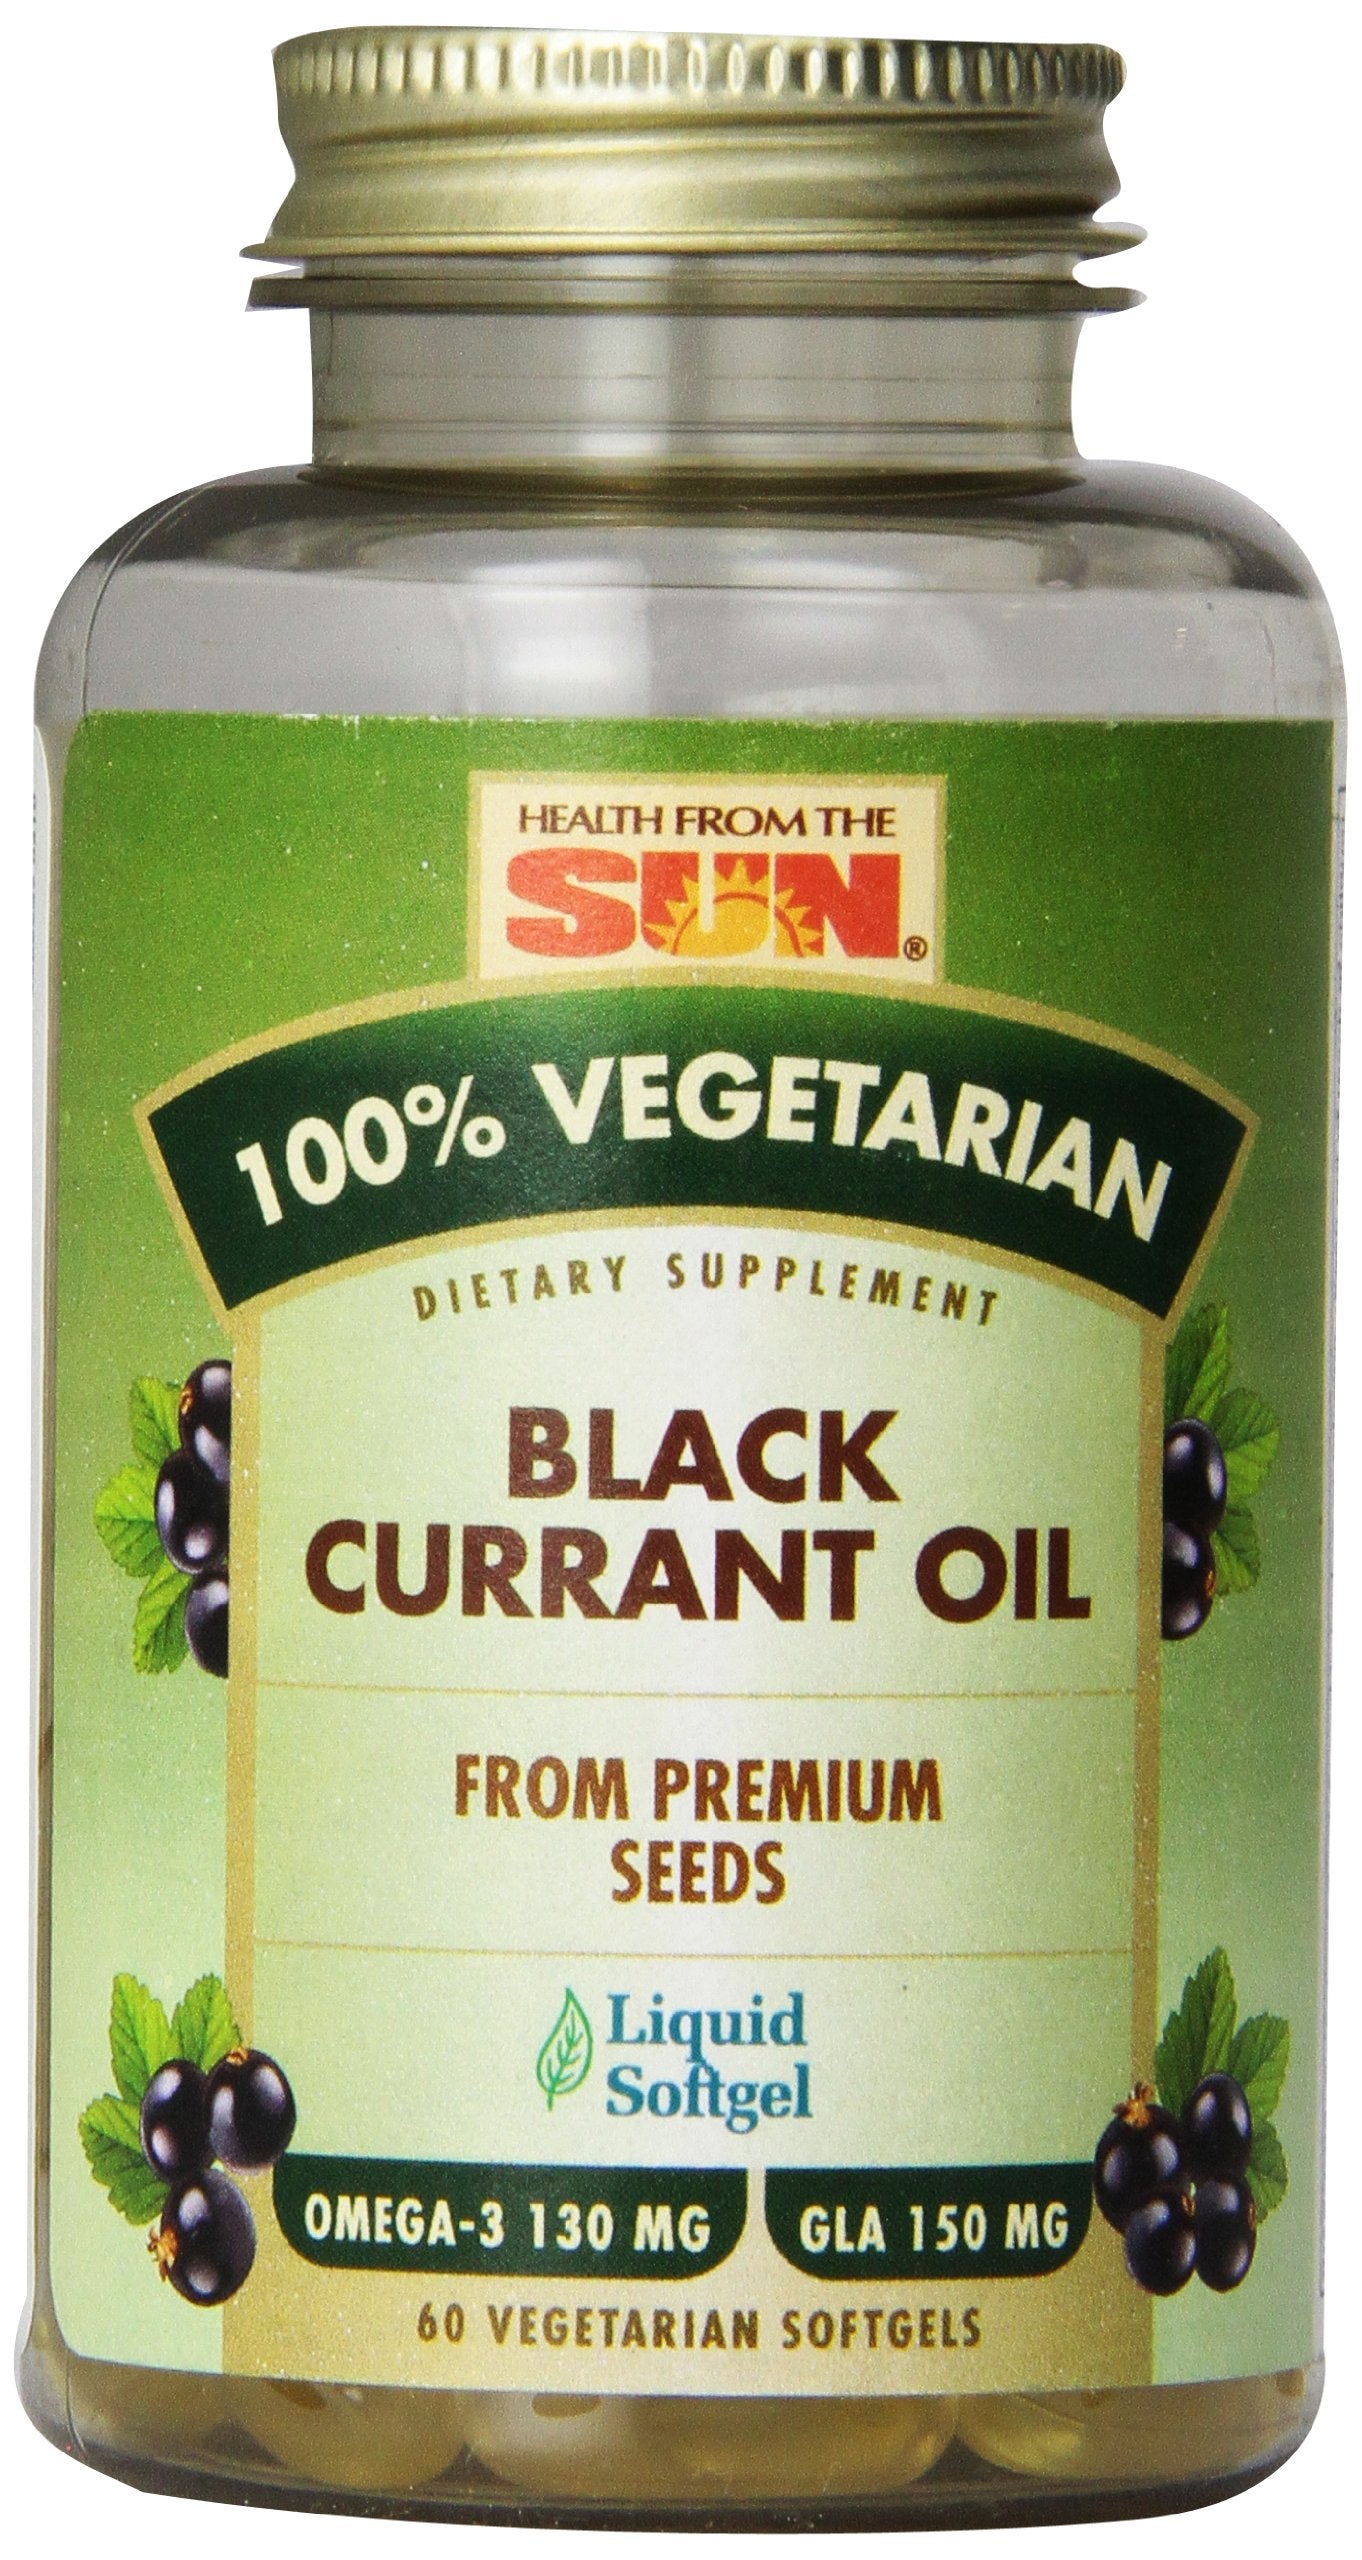 NaturesLife BlackCurrantOil,Vegetarian 60ct VeganSoftgel